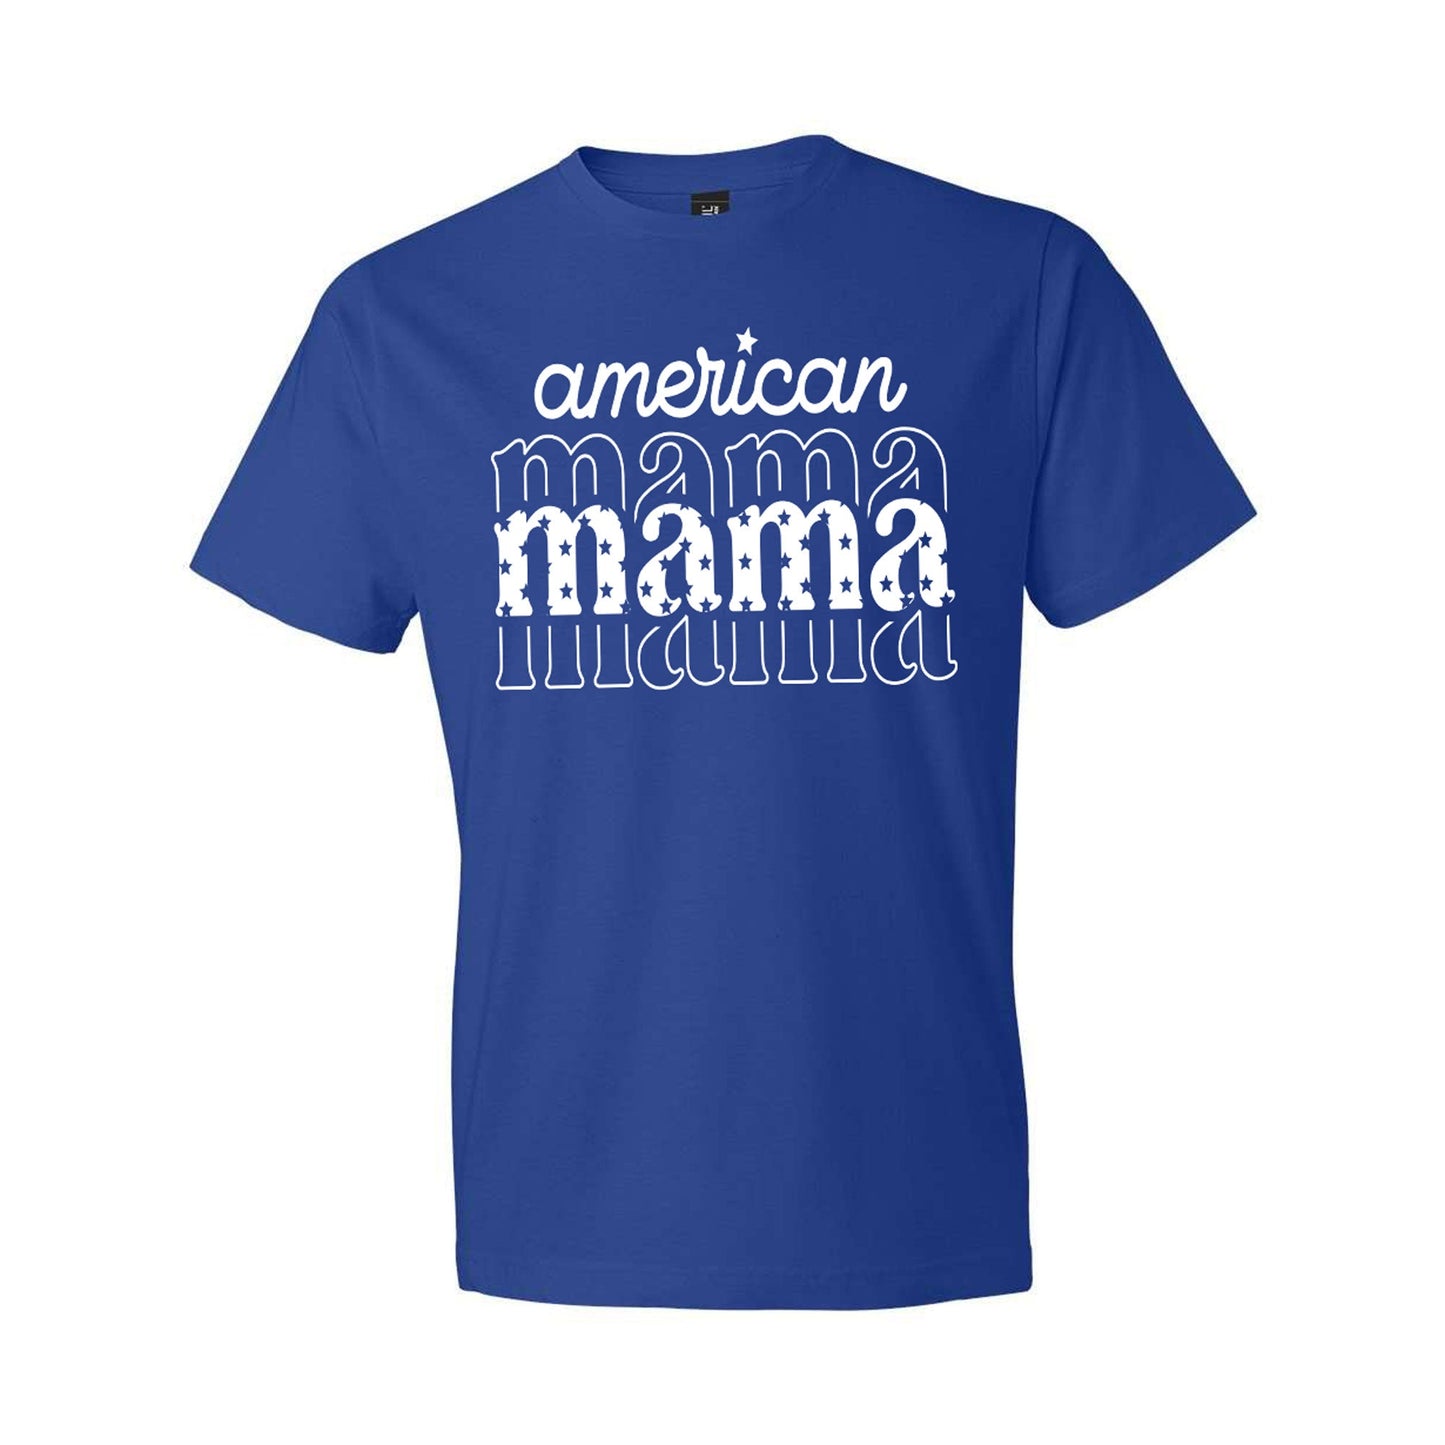 royal blue t-shirt with a white retro american mama print